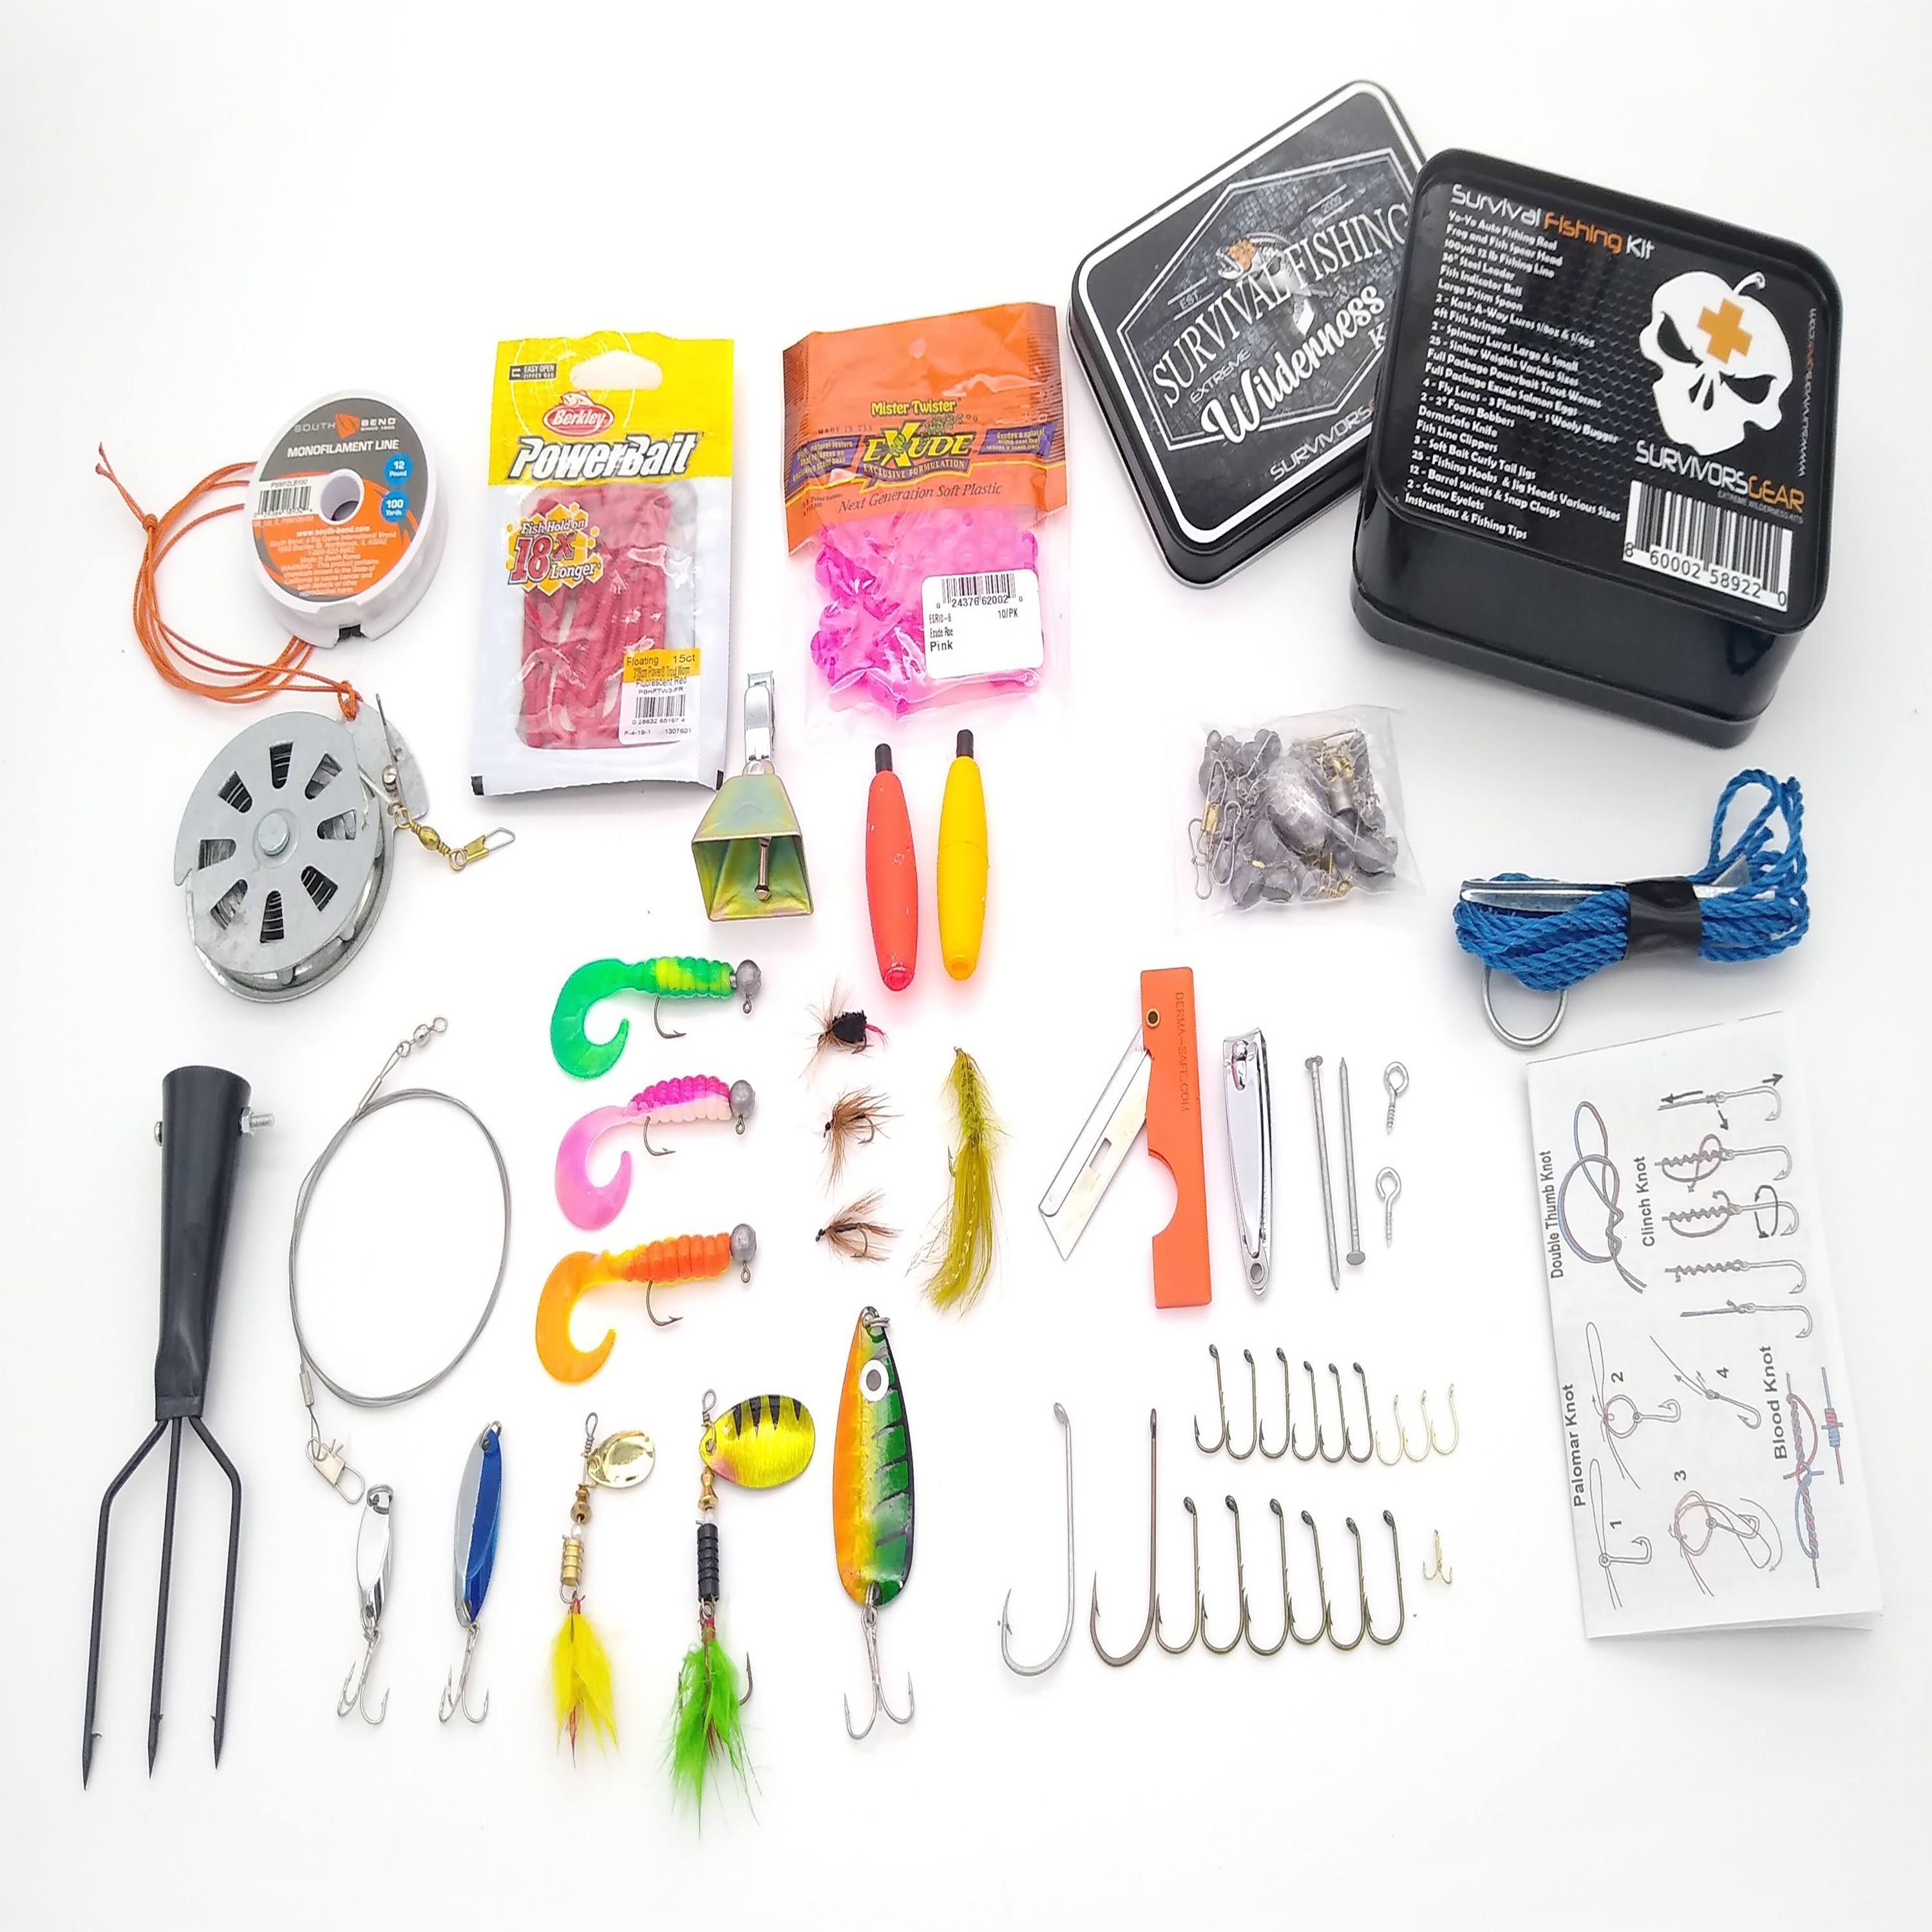 Survivors Gear Extreme Wilderness Kits Survival Fishing Kit